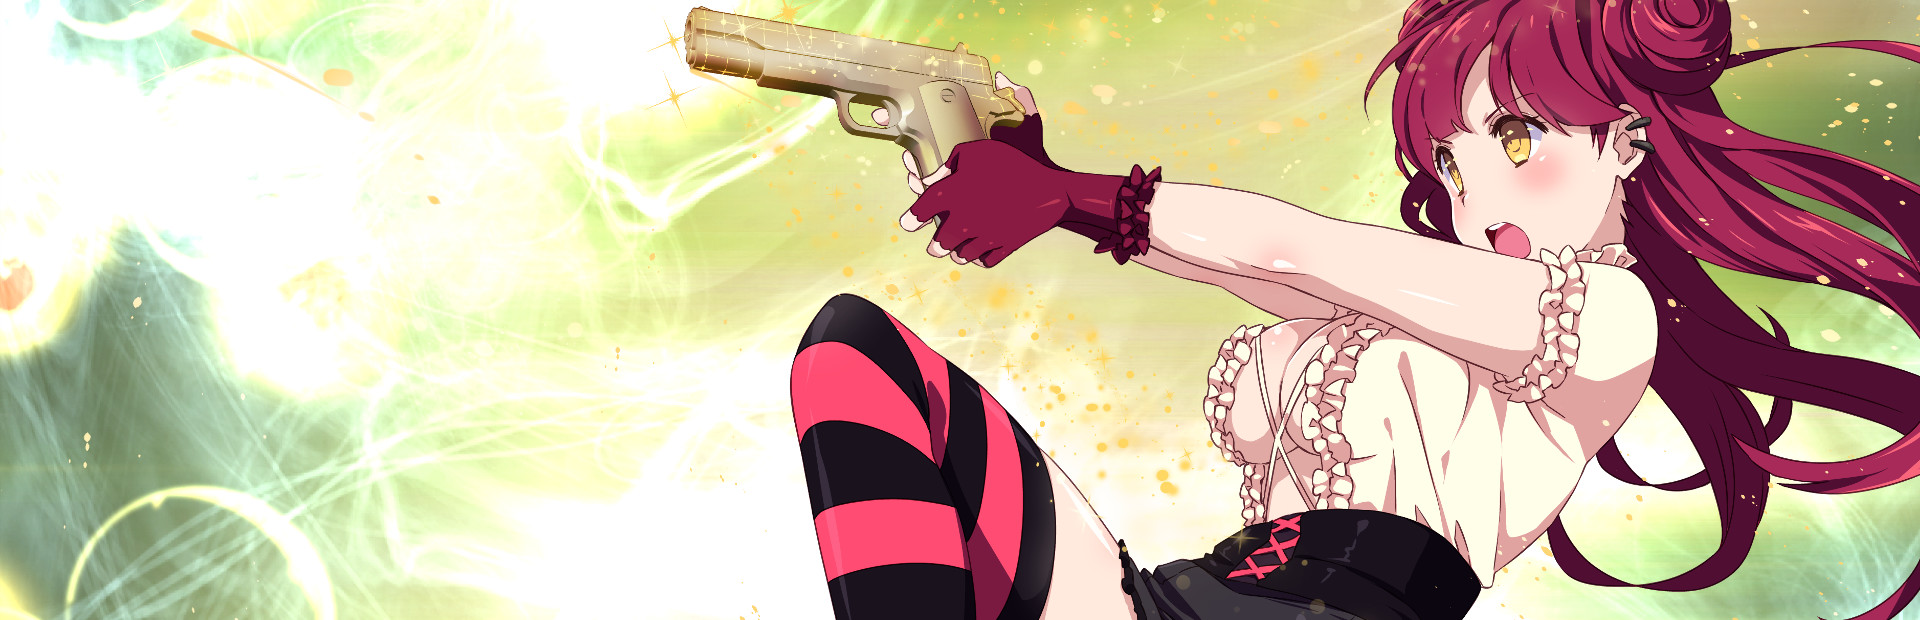 Sakura Agent cover image